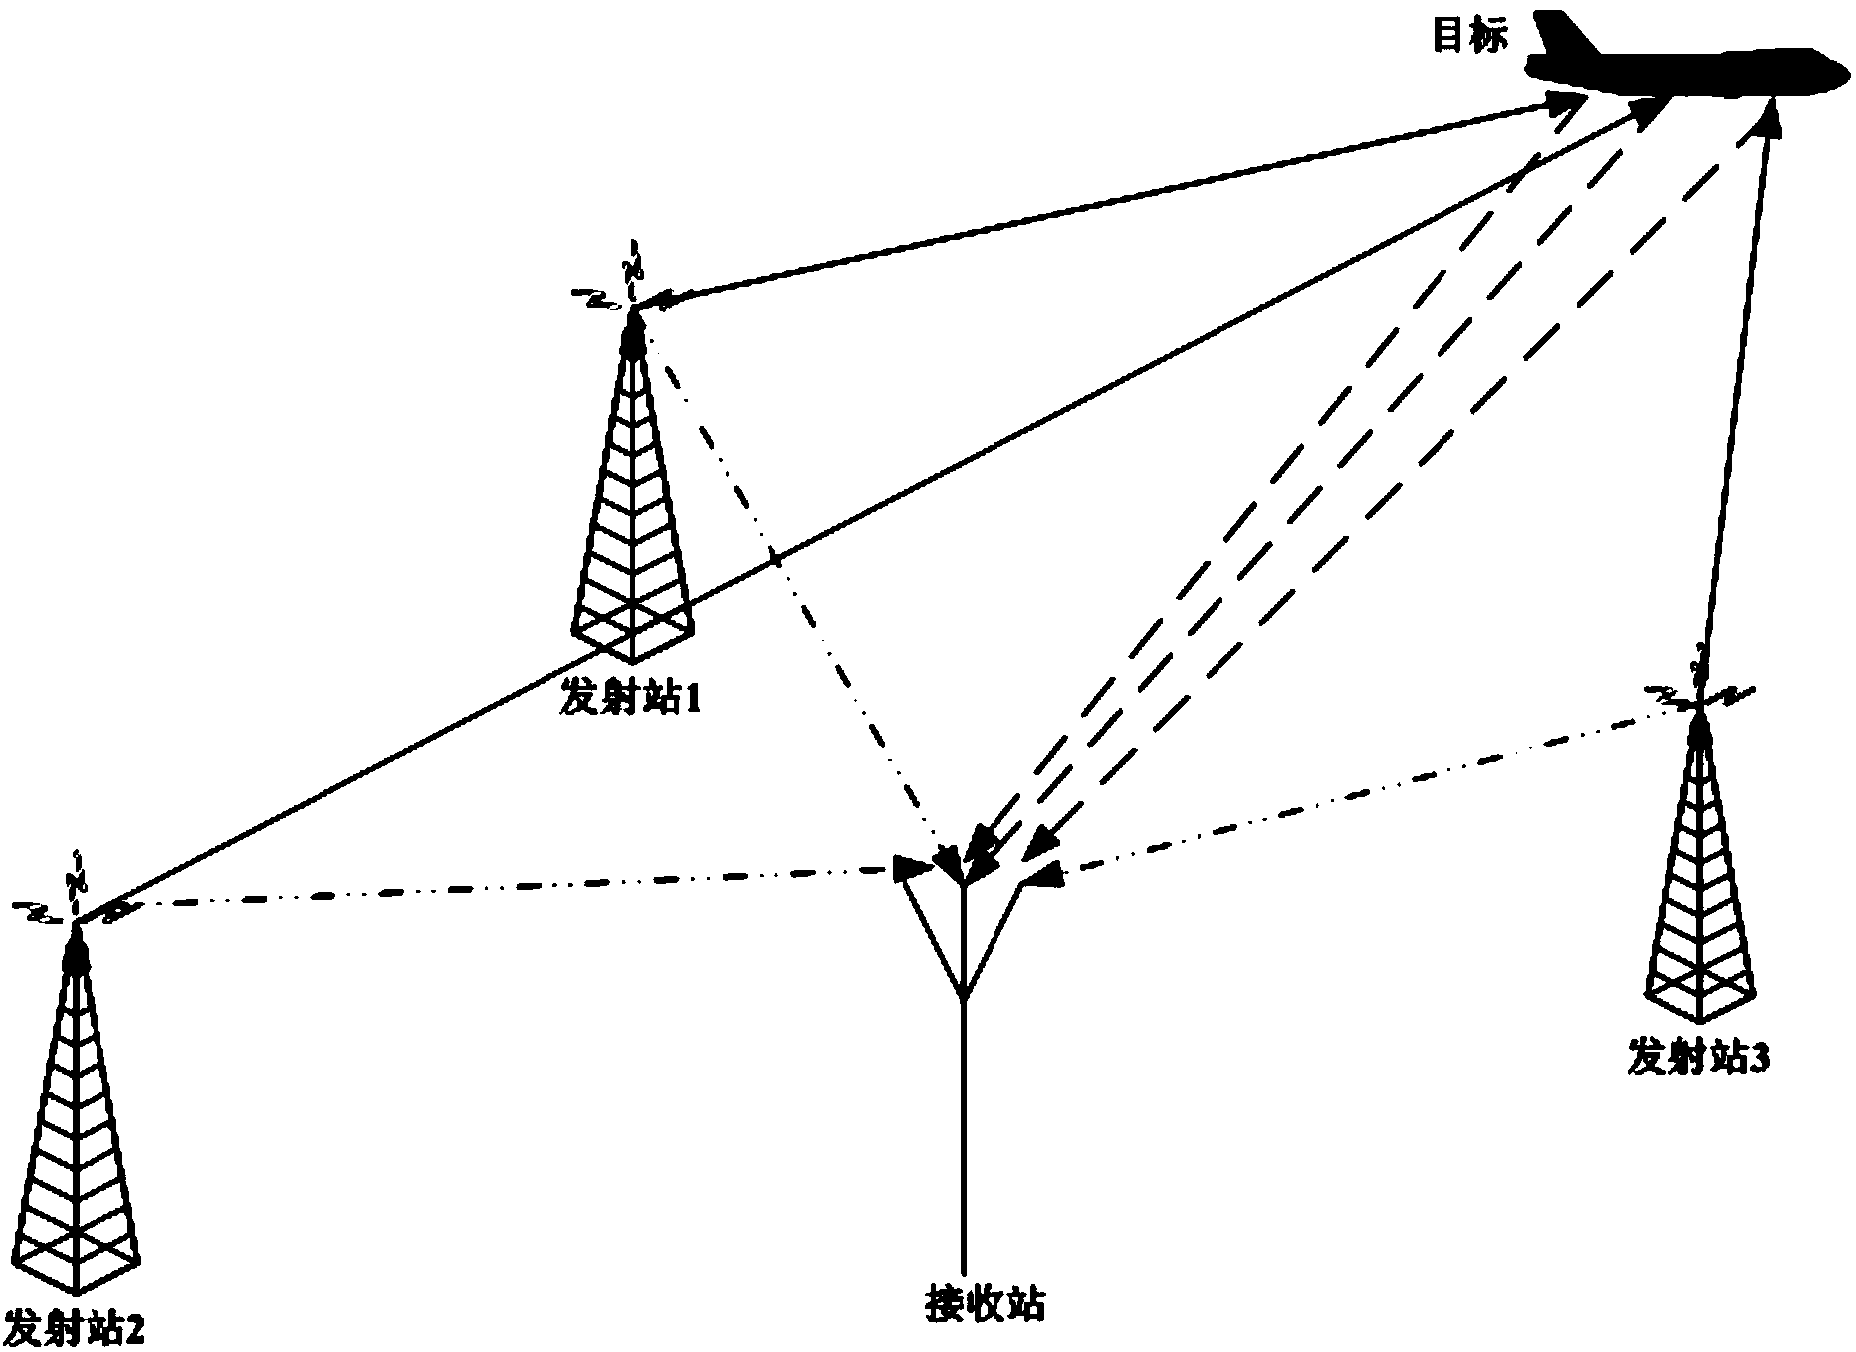 Multi-target tracking method by adopting external illuminating radar and combining target angles